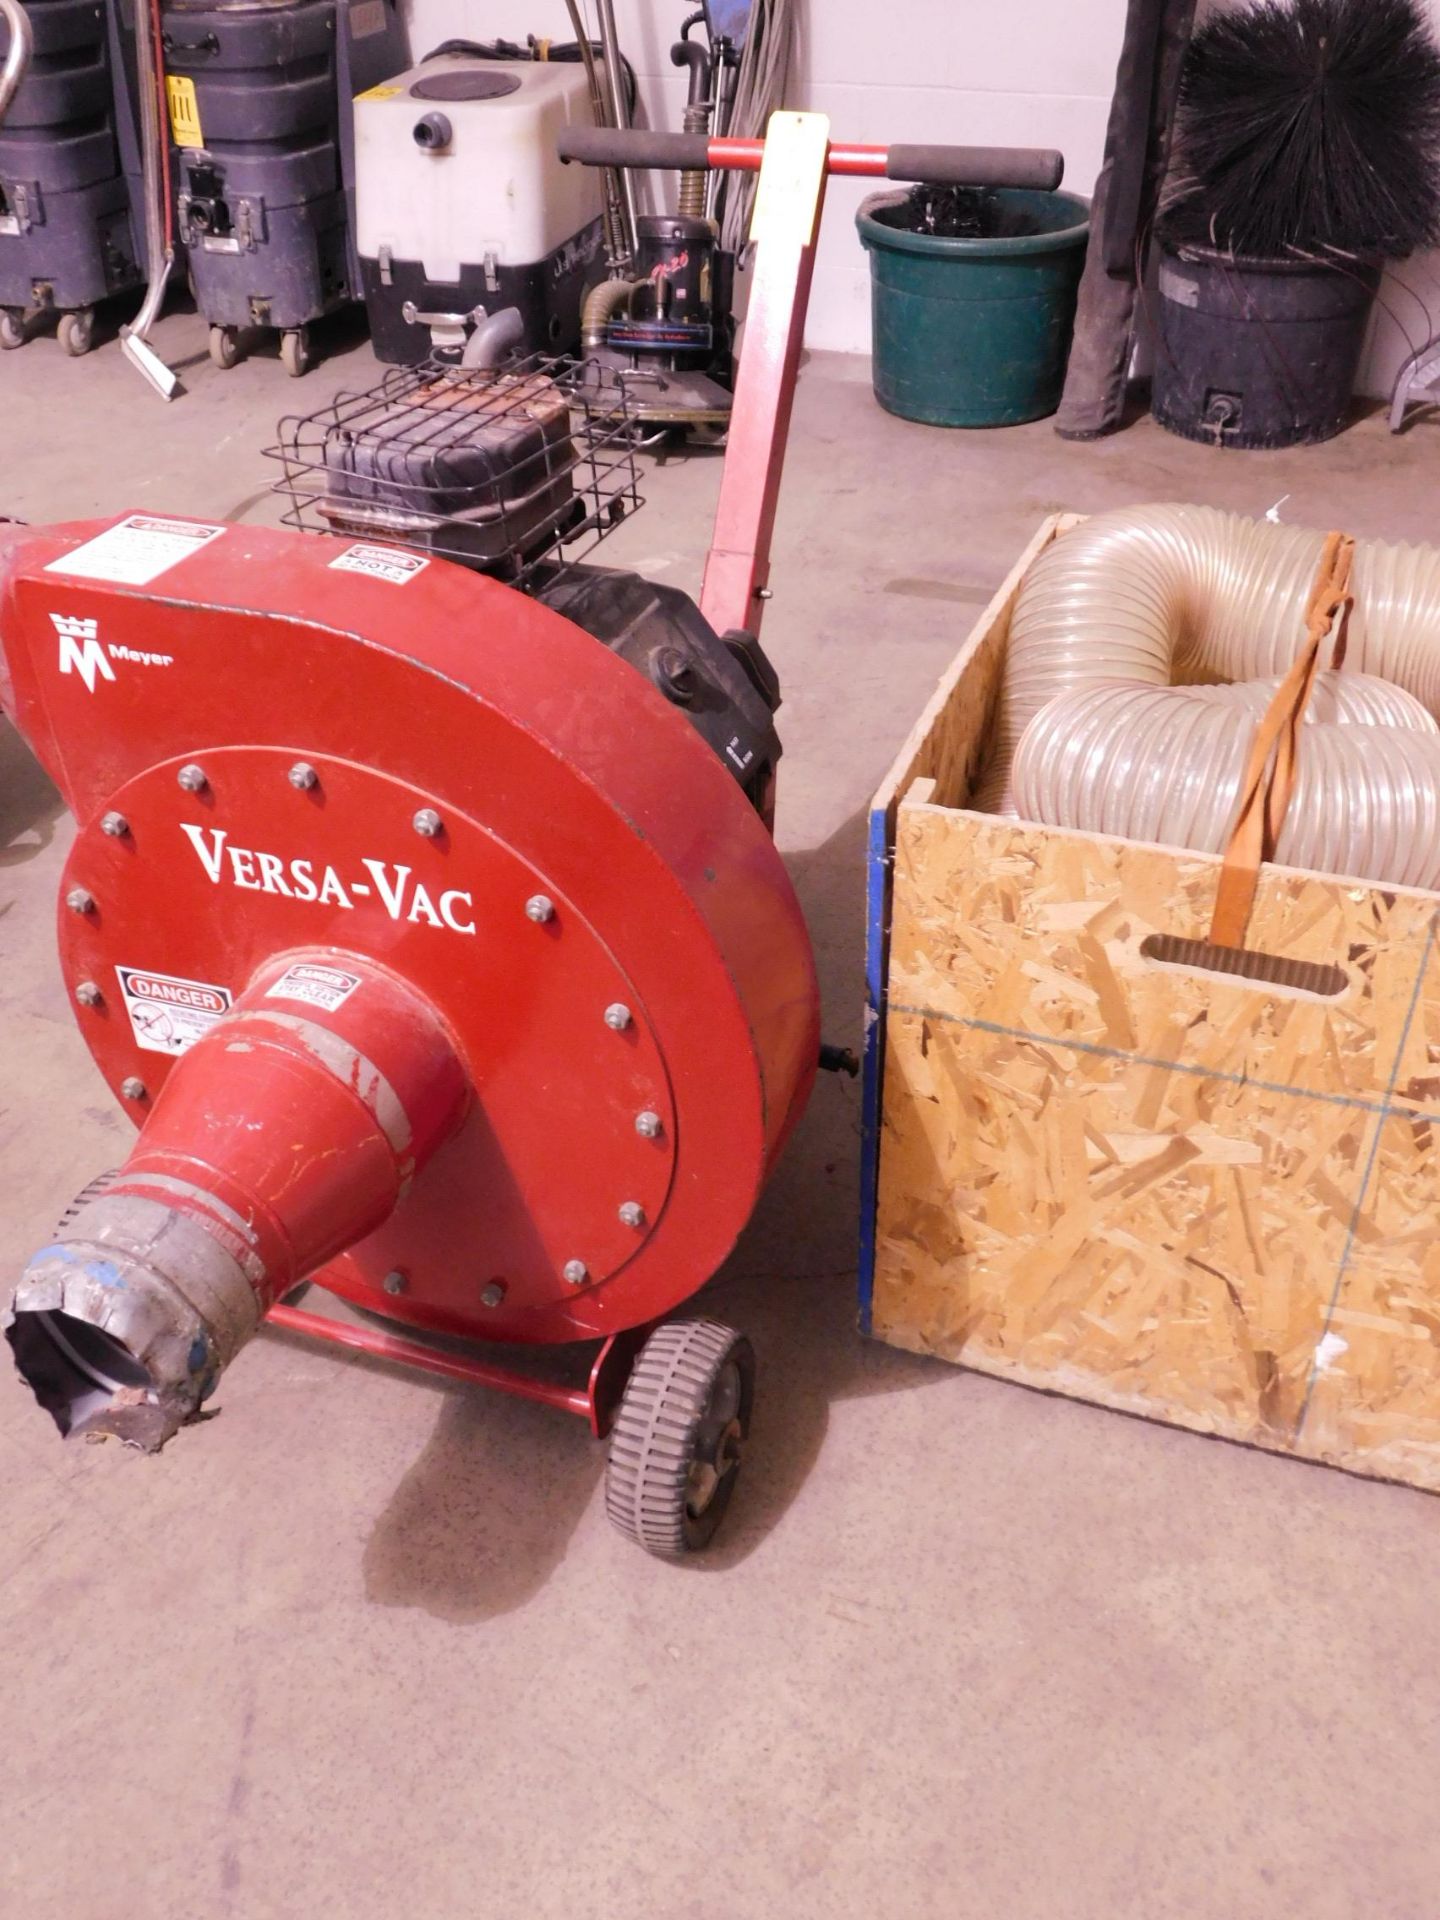 Meyer "Versa-Vac" Gas-Powered Vacuum with Kohler Command Pro 15 Engine and Hose